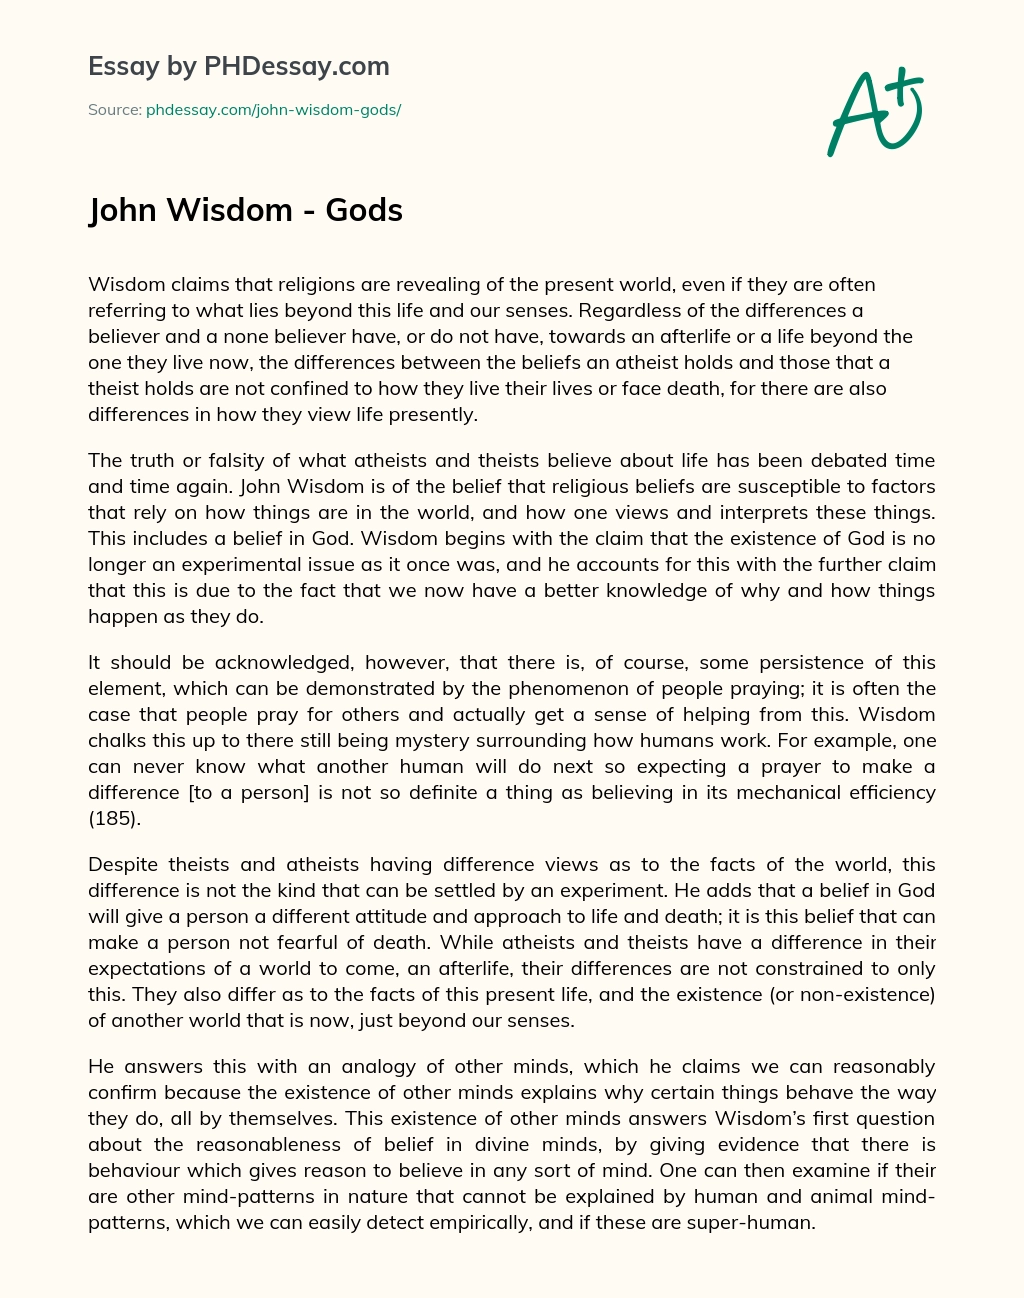 John Wisdom – Gods essay